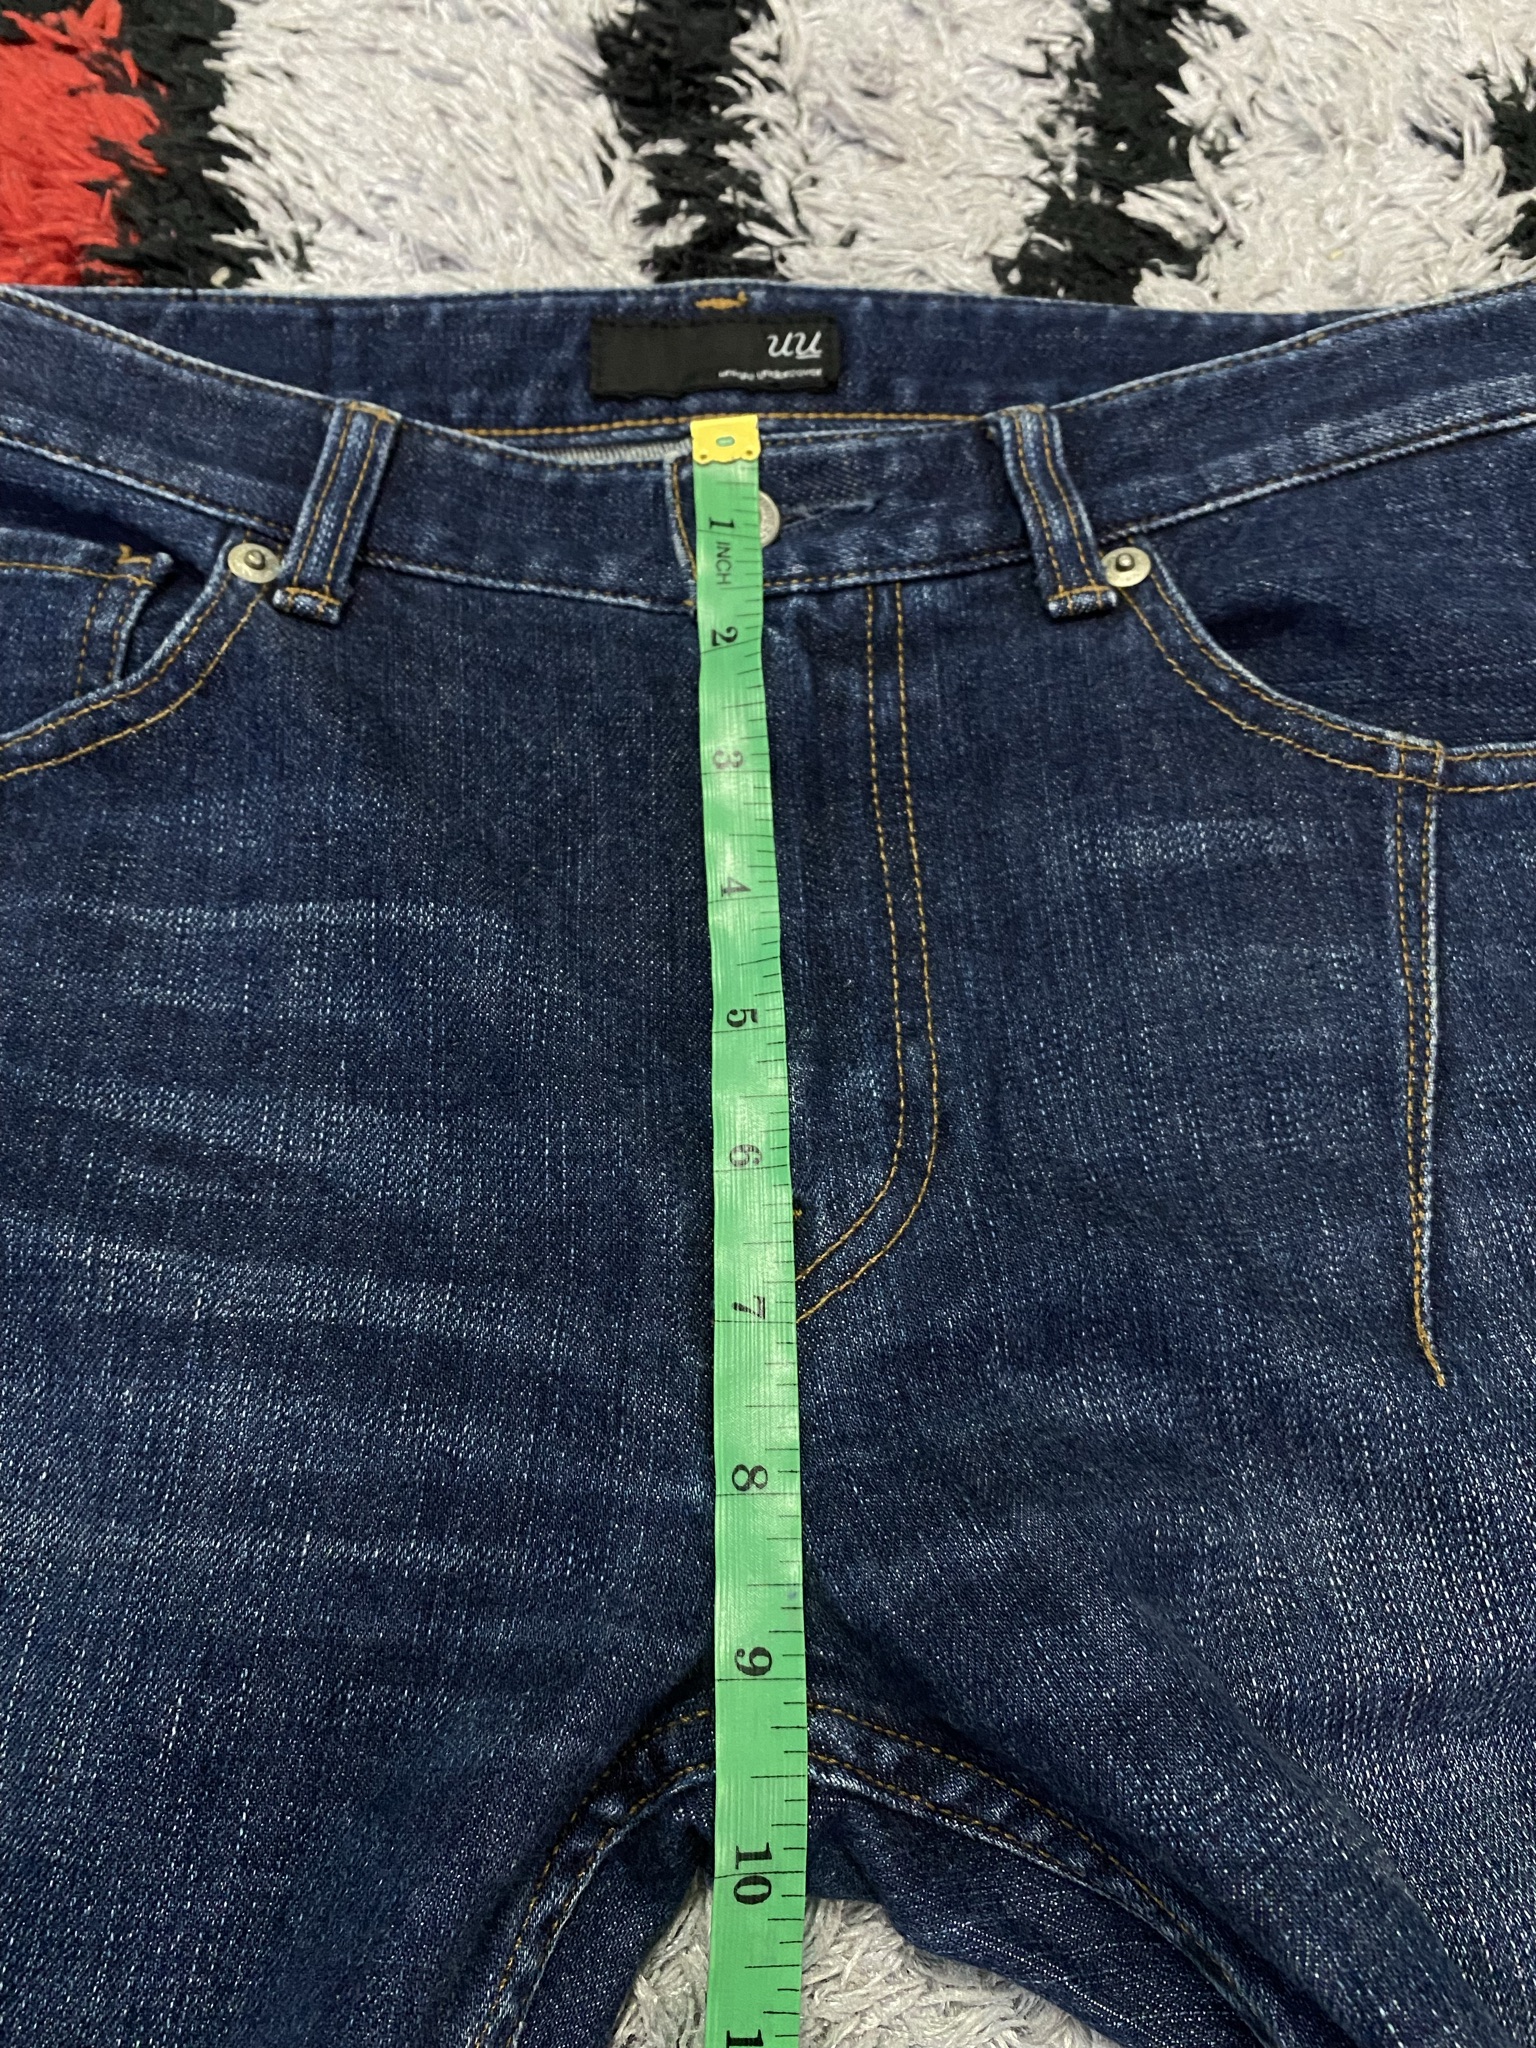 UNDERCOVER x Uniqlo Mens Jeans size 30 Inches - 19